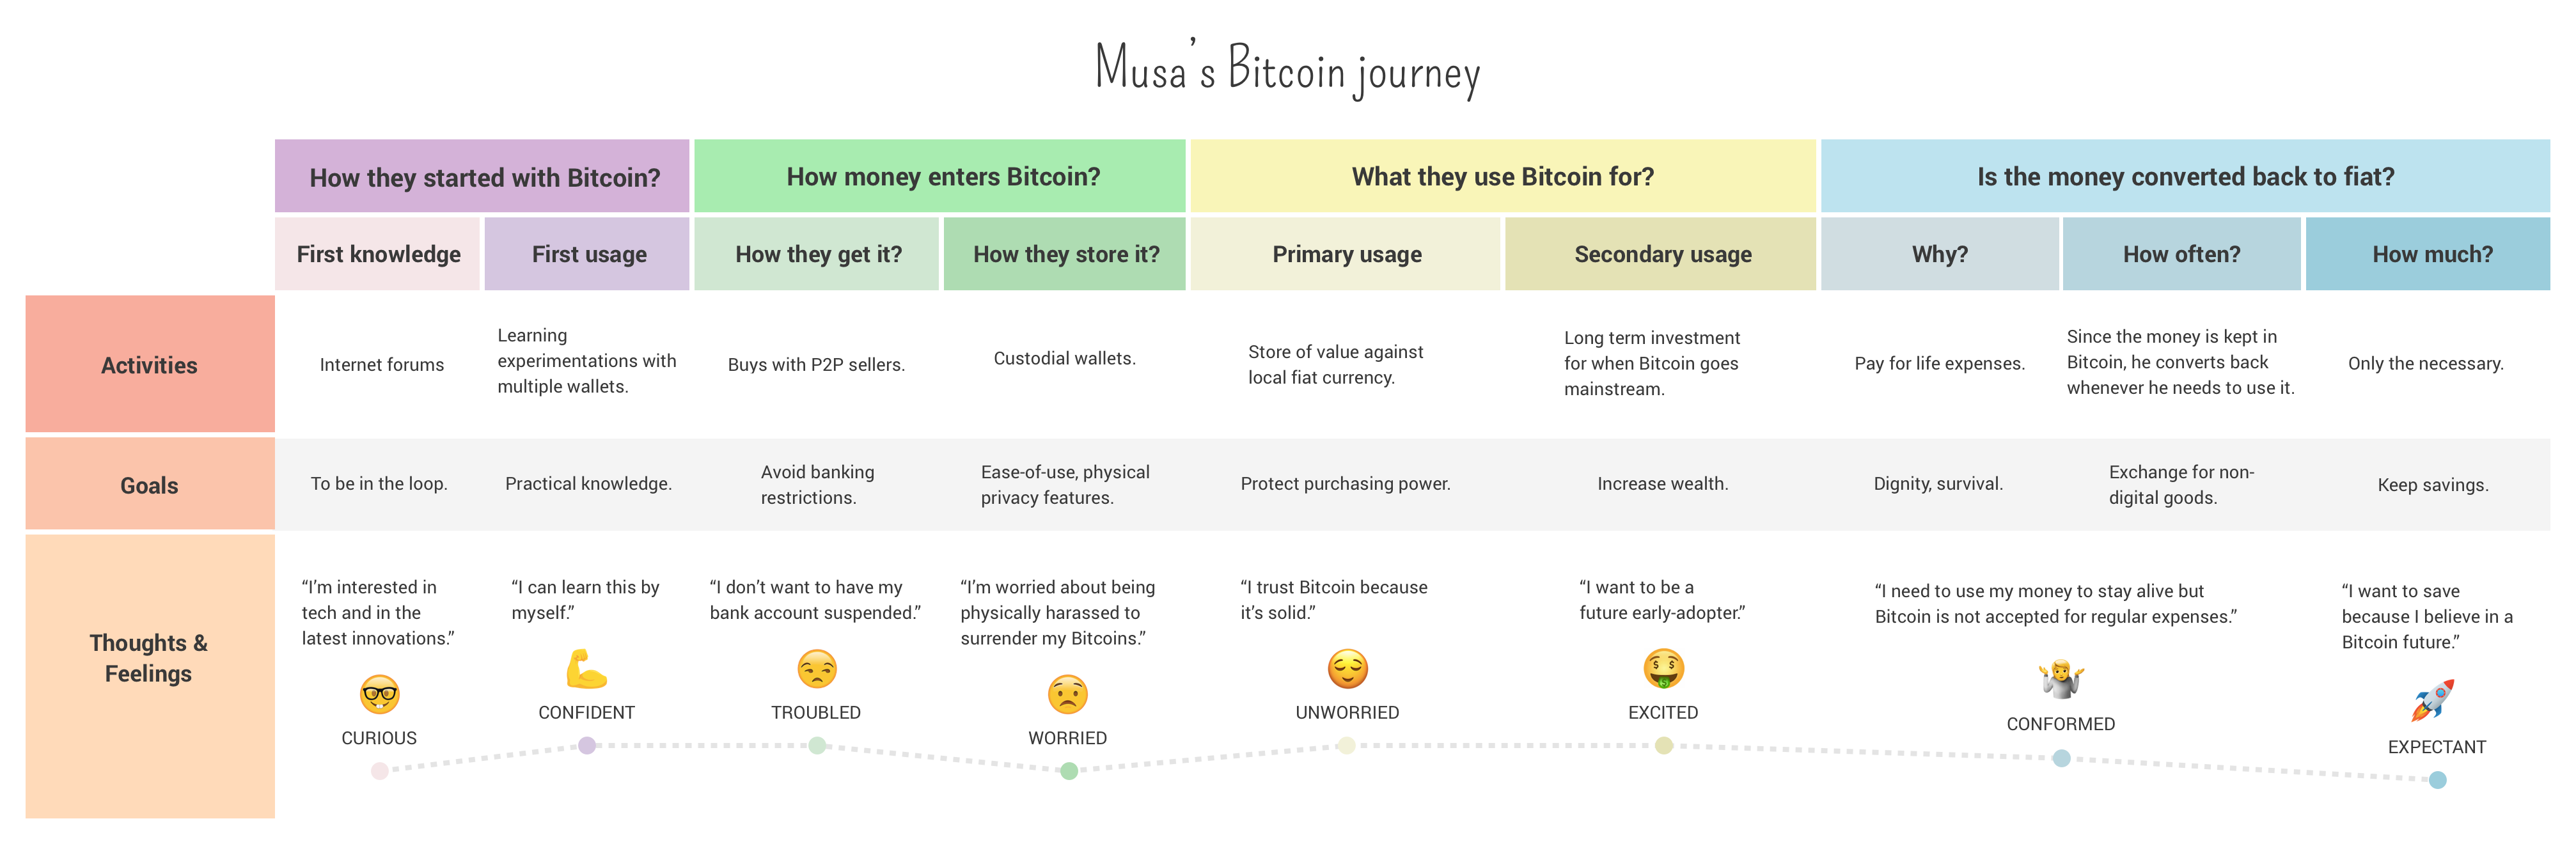 Musa’s Bitcoin journey